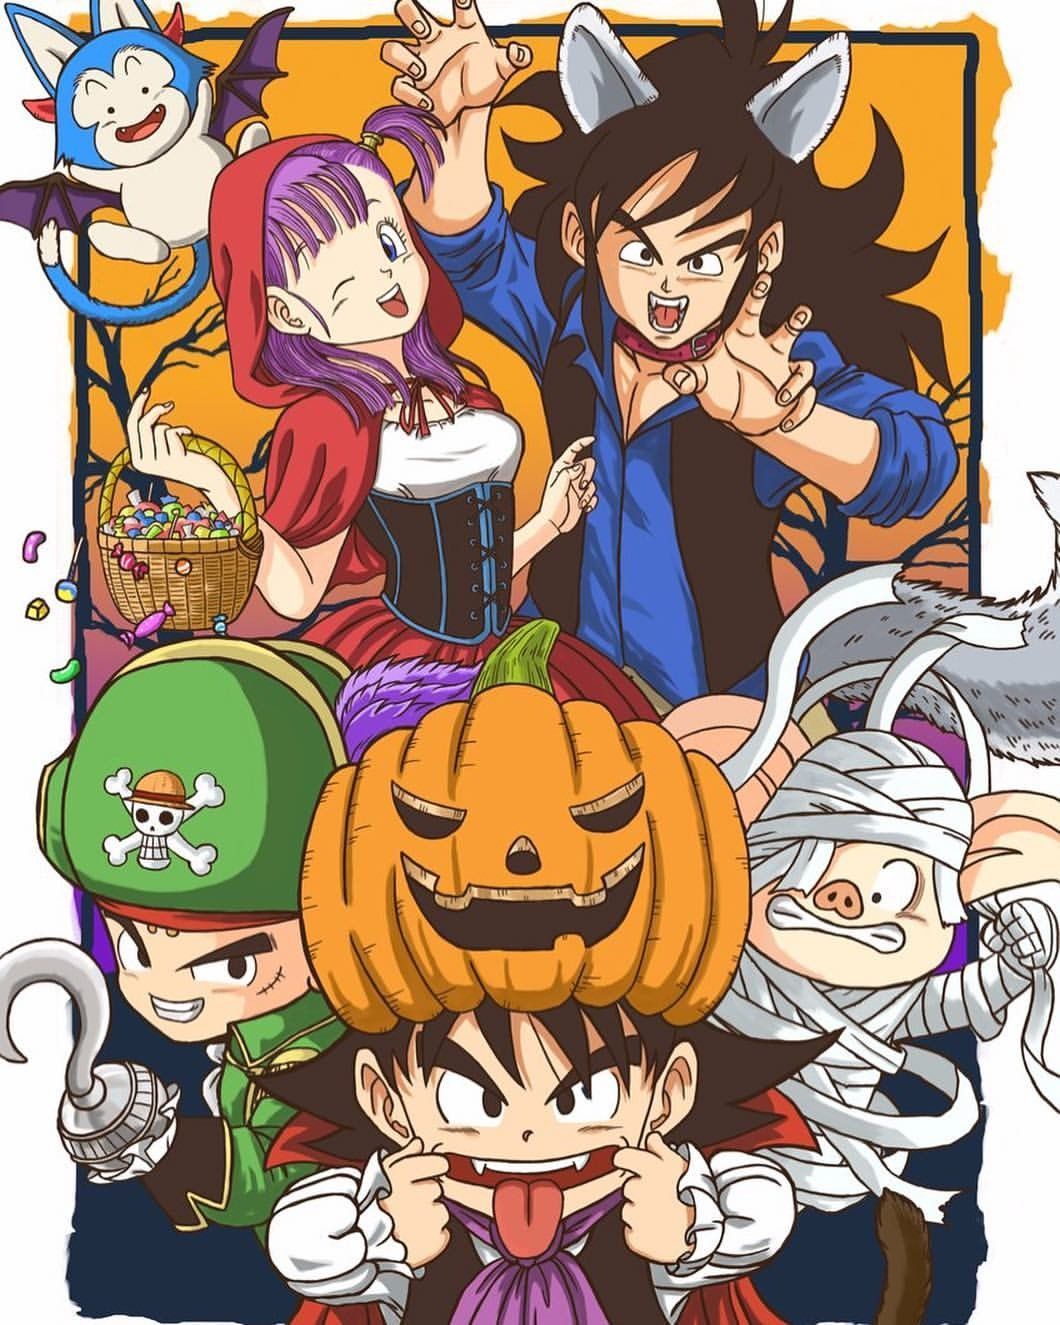 Dragon Ball Kid Goku & Moon Halloween Wallpapers for iPhone 4k